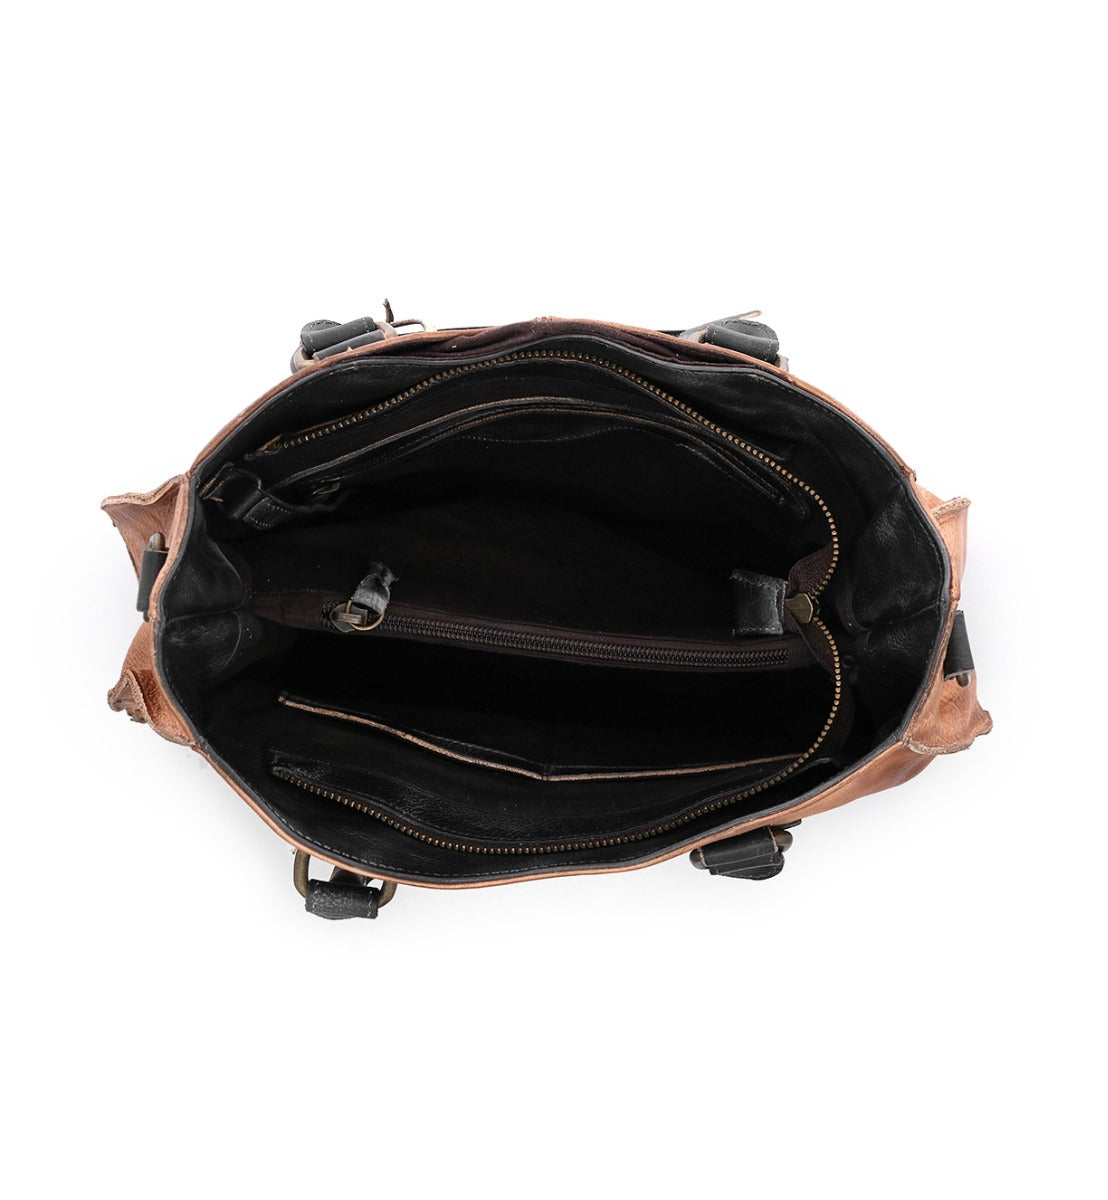 Inside of a tan Bed Stu Bruna leather bag with black handles.